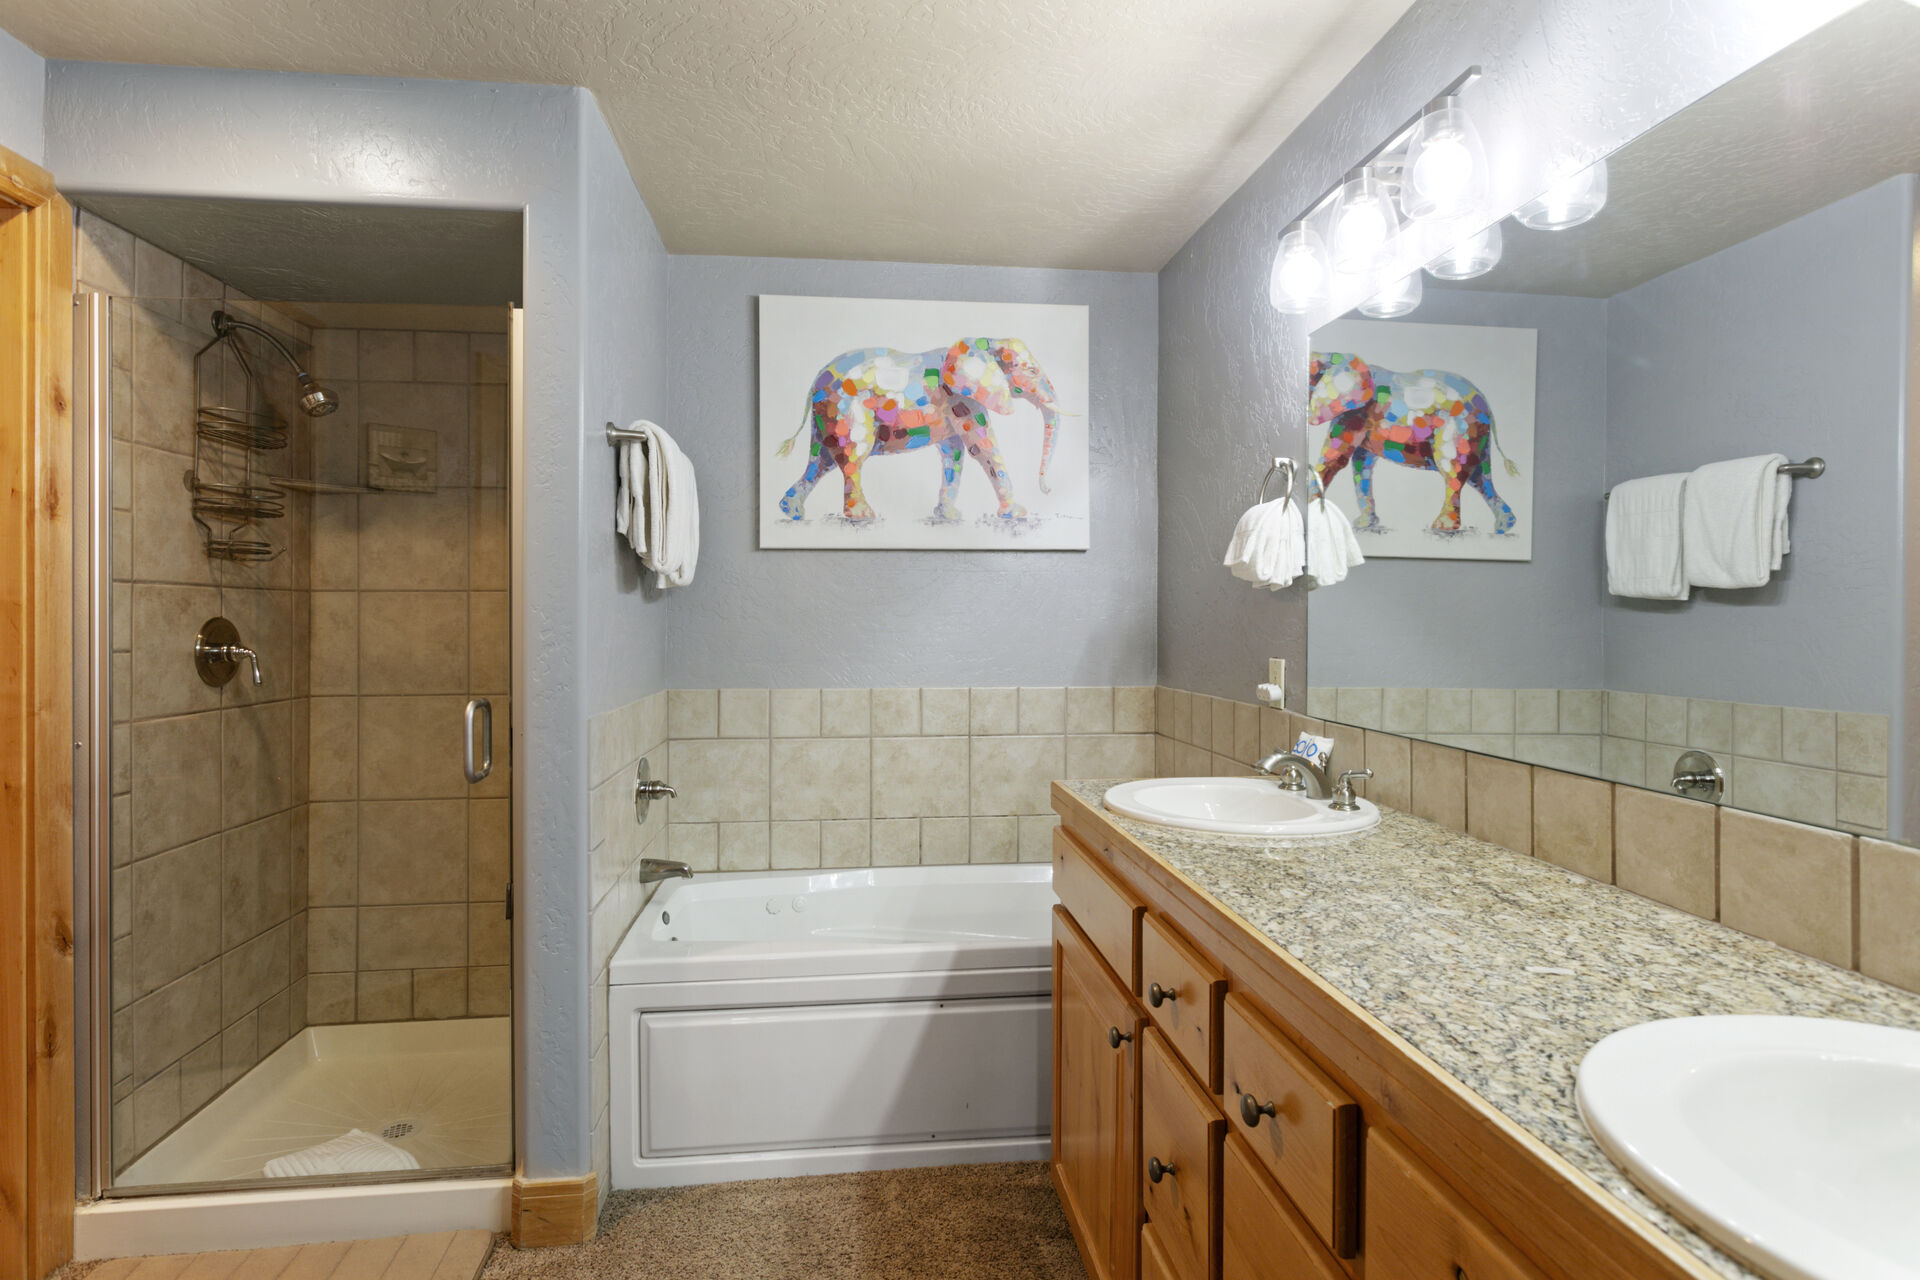 Master bedroom with ensuite bathroom, soaking tub, shower, closet and dual vanity sinks